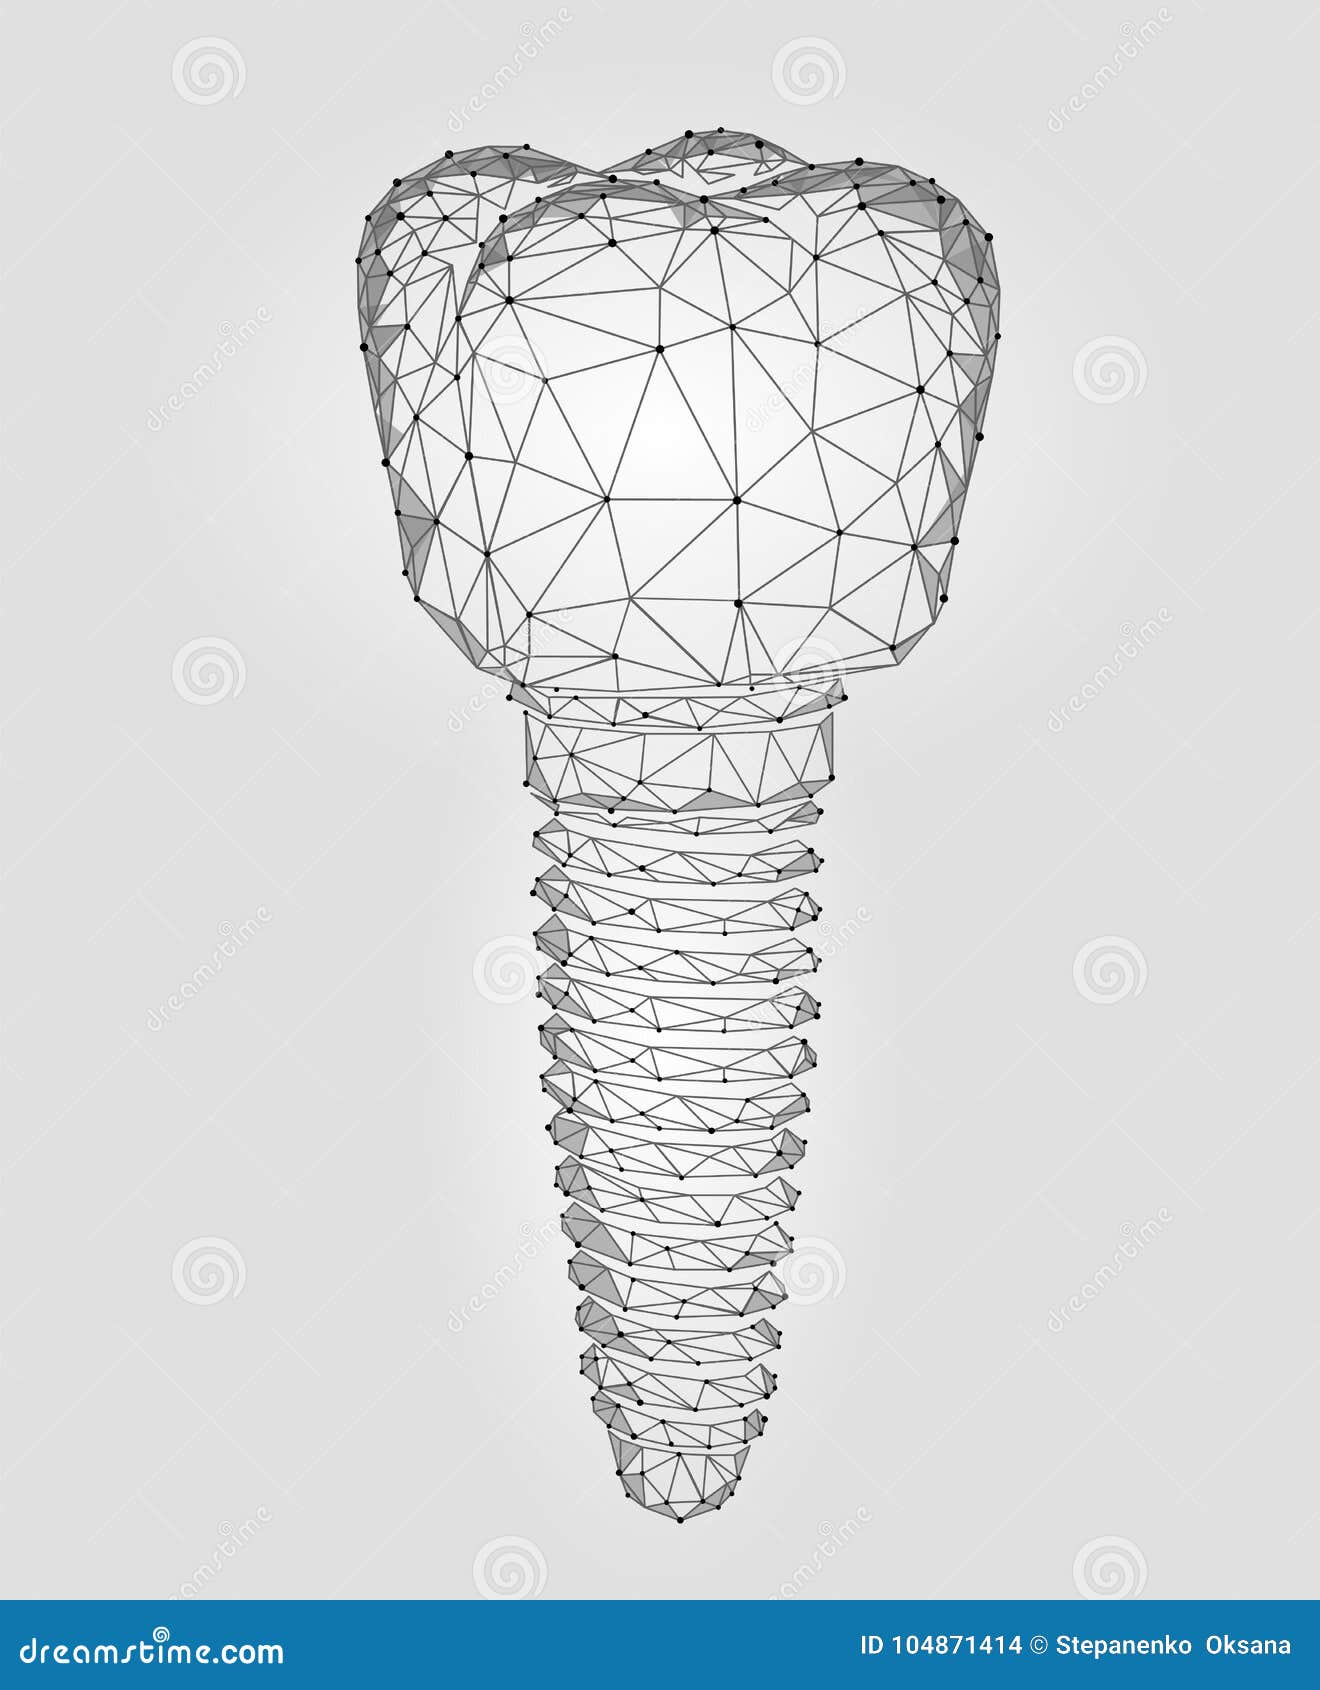 molar tooth dental implant 3d low poly geometric model. dentistry innovation future technology titan metal thread